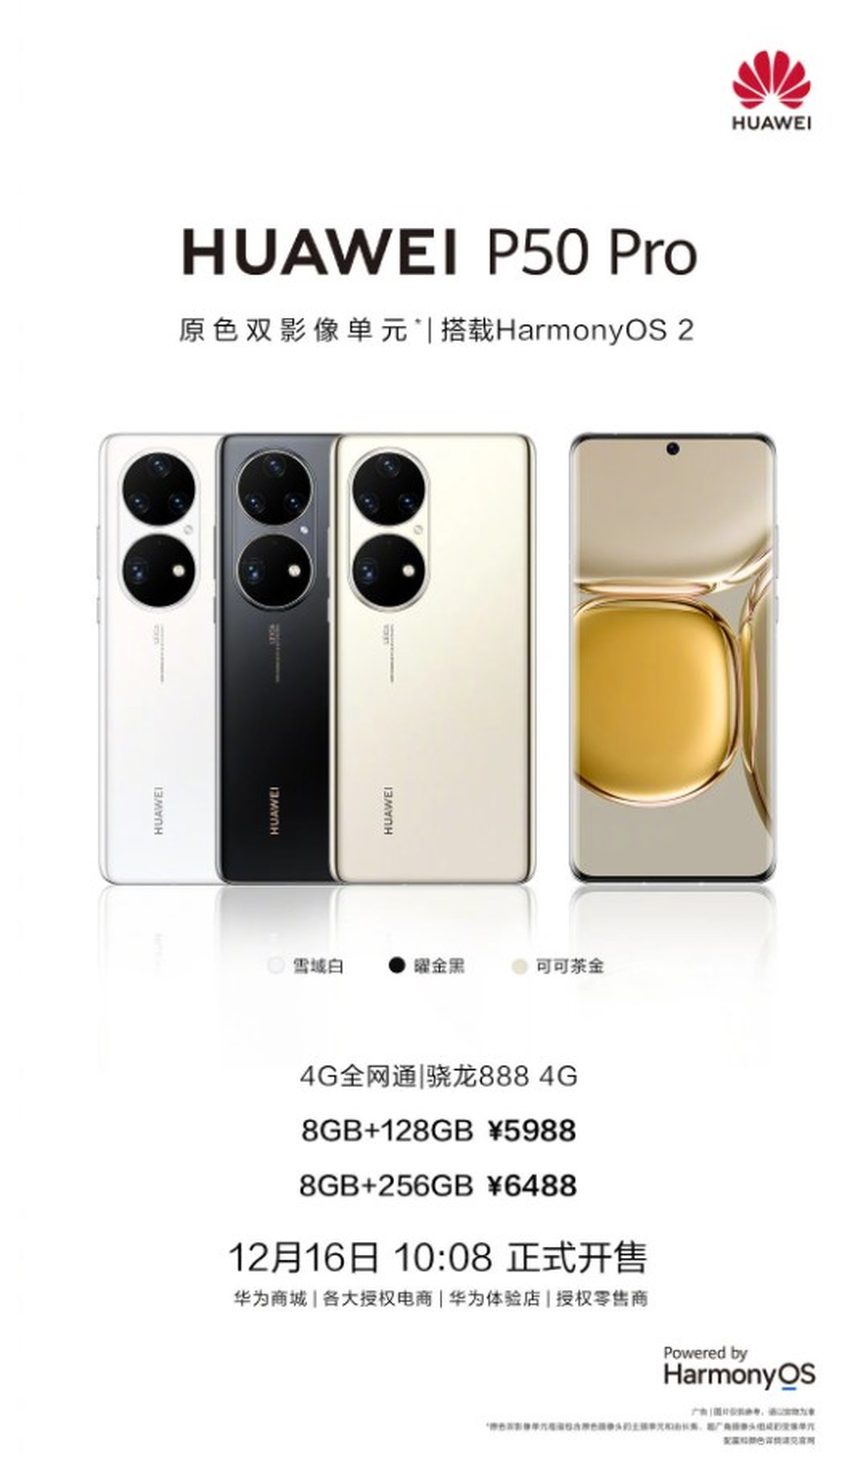 Huawei P50 Pro 4G : spécifications, prix et date de sortie